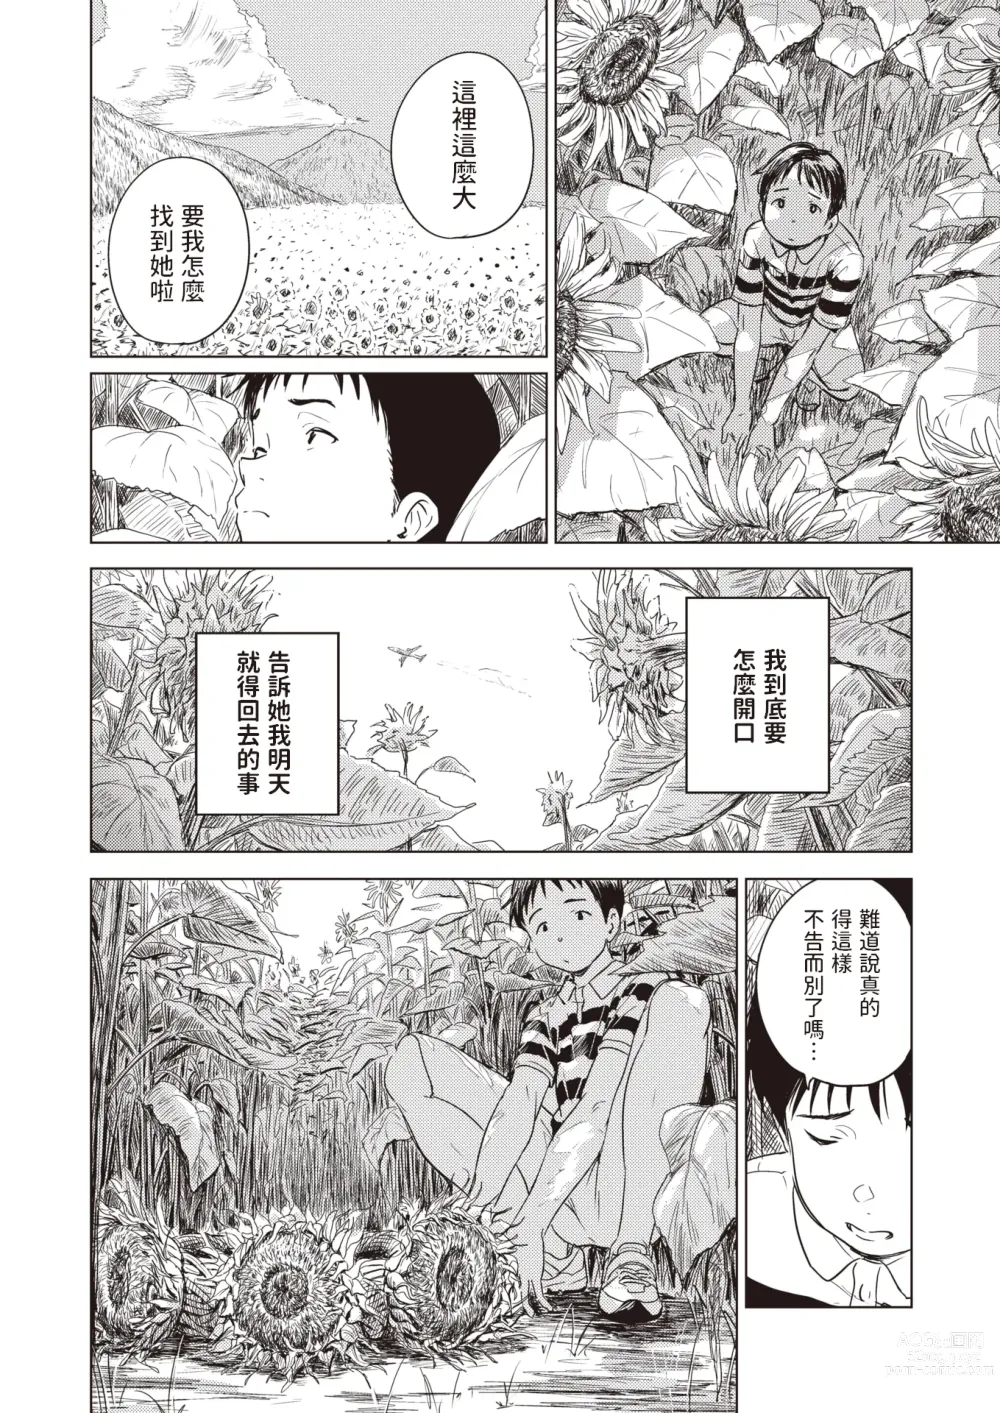 Page 4 of manga Eien ni Natsuyasumi